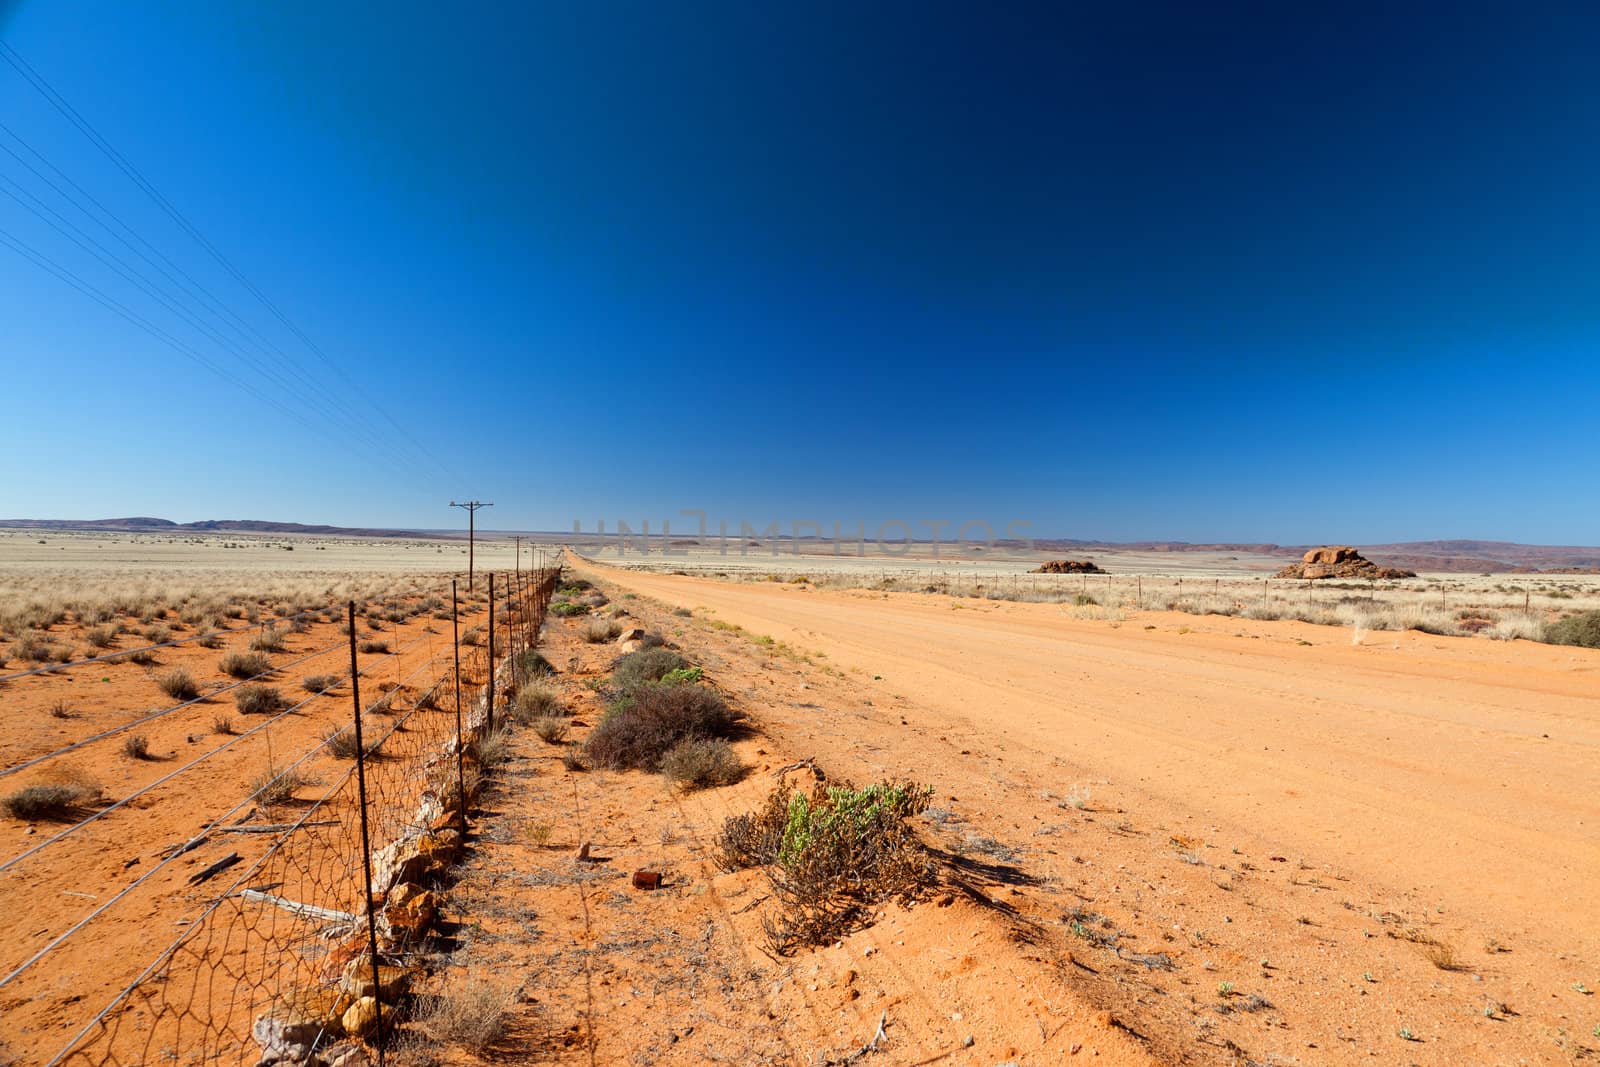 Road through a vast, arid landscape - horizontal by Farina6000